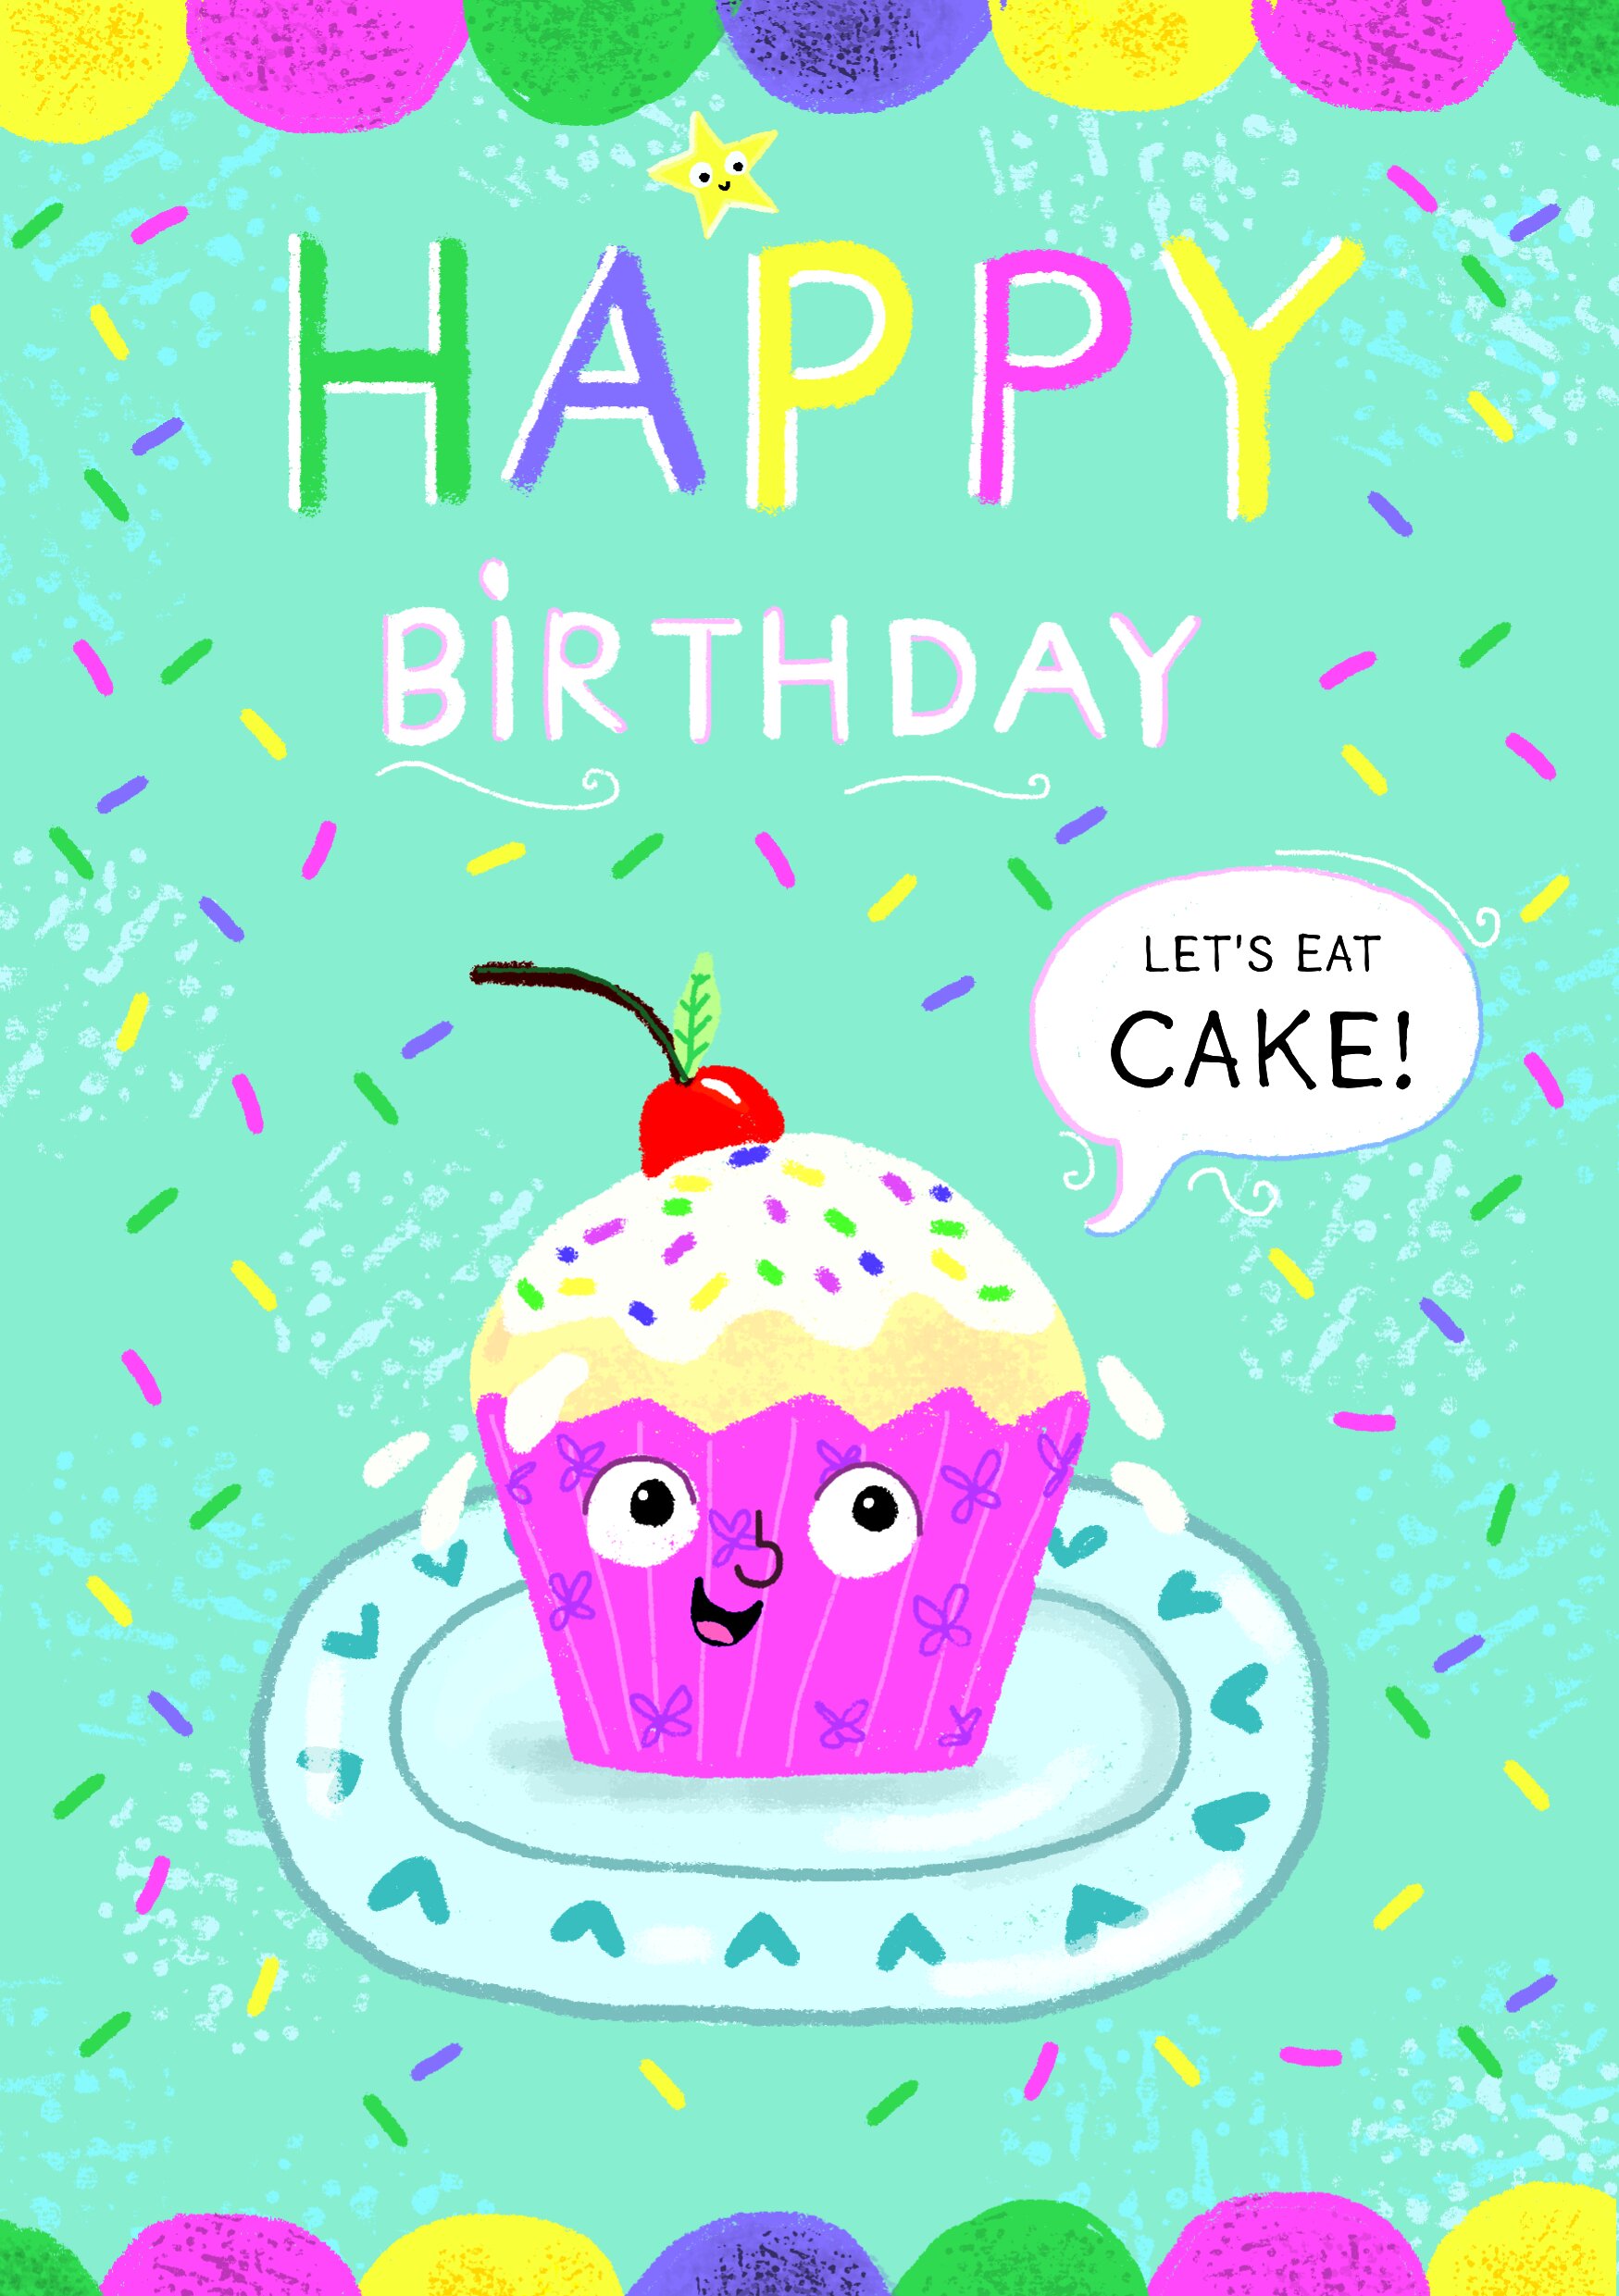 Birthday cake.jpg